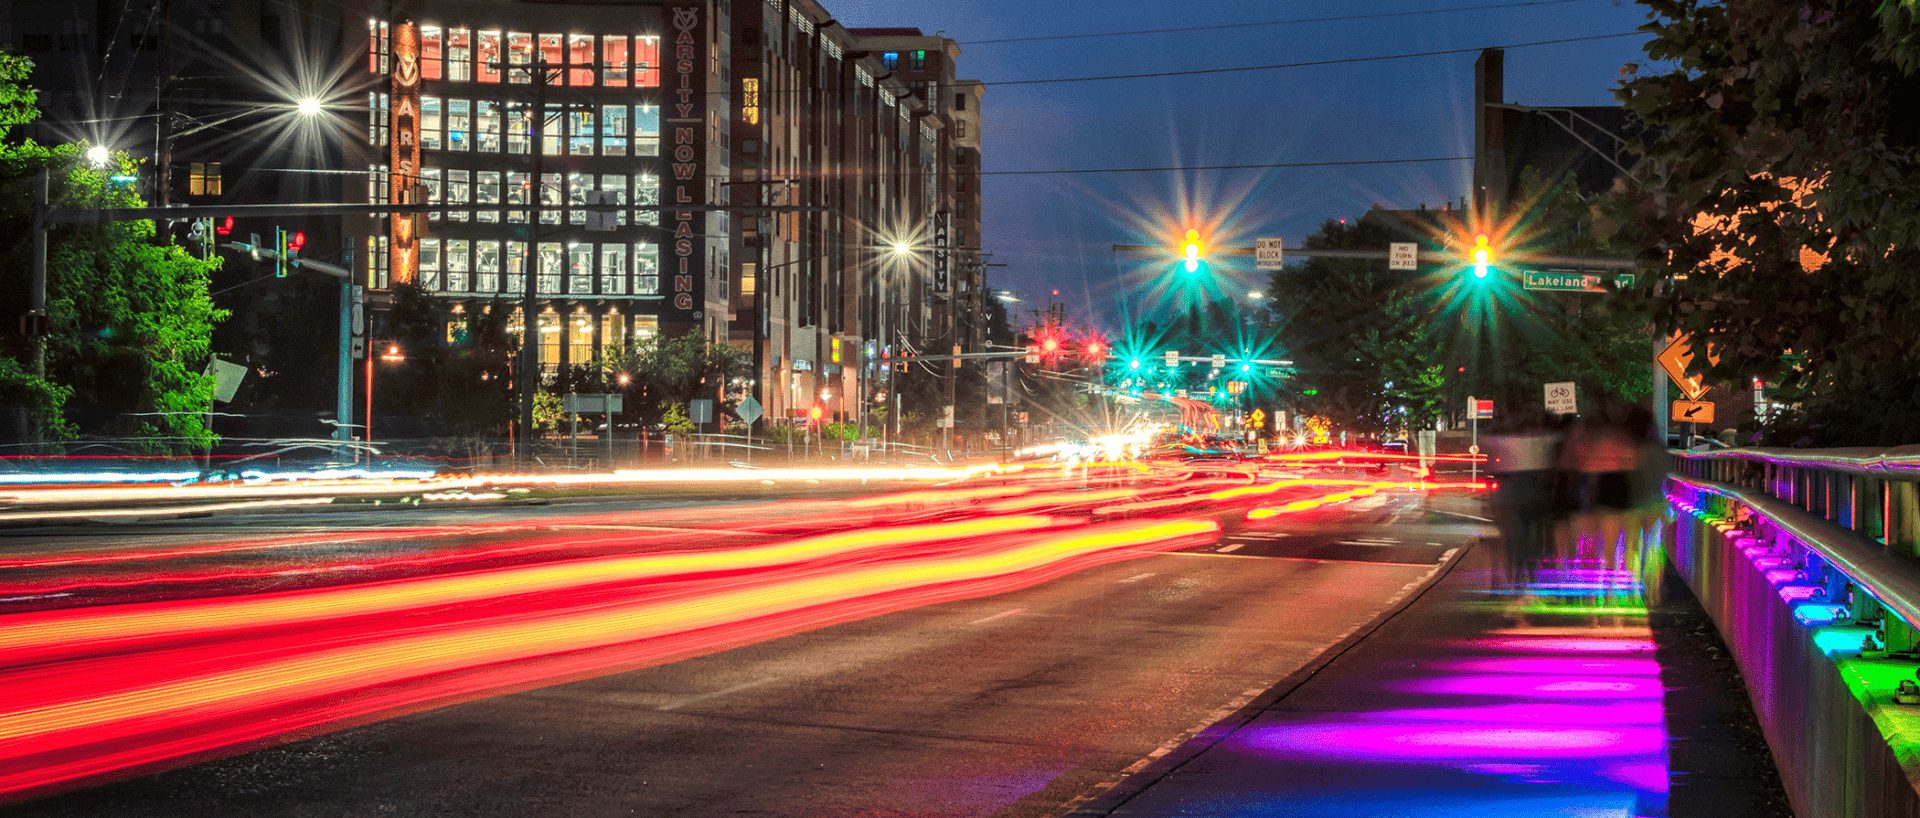 Night view of street